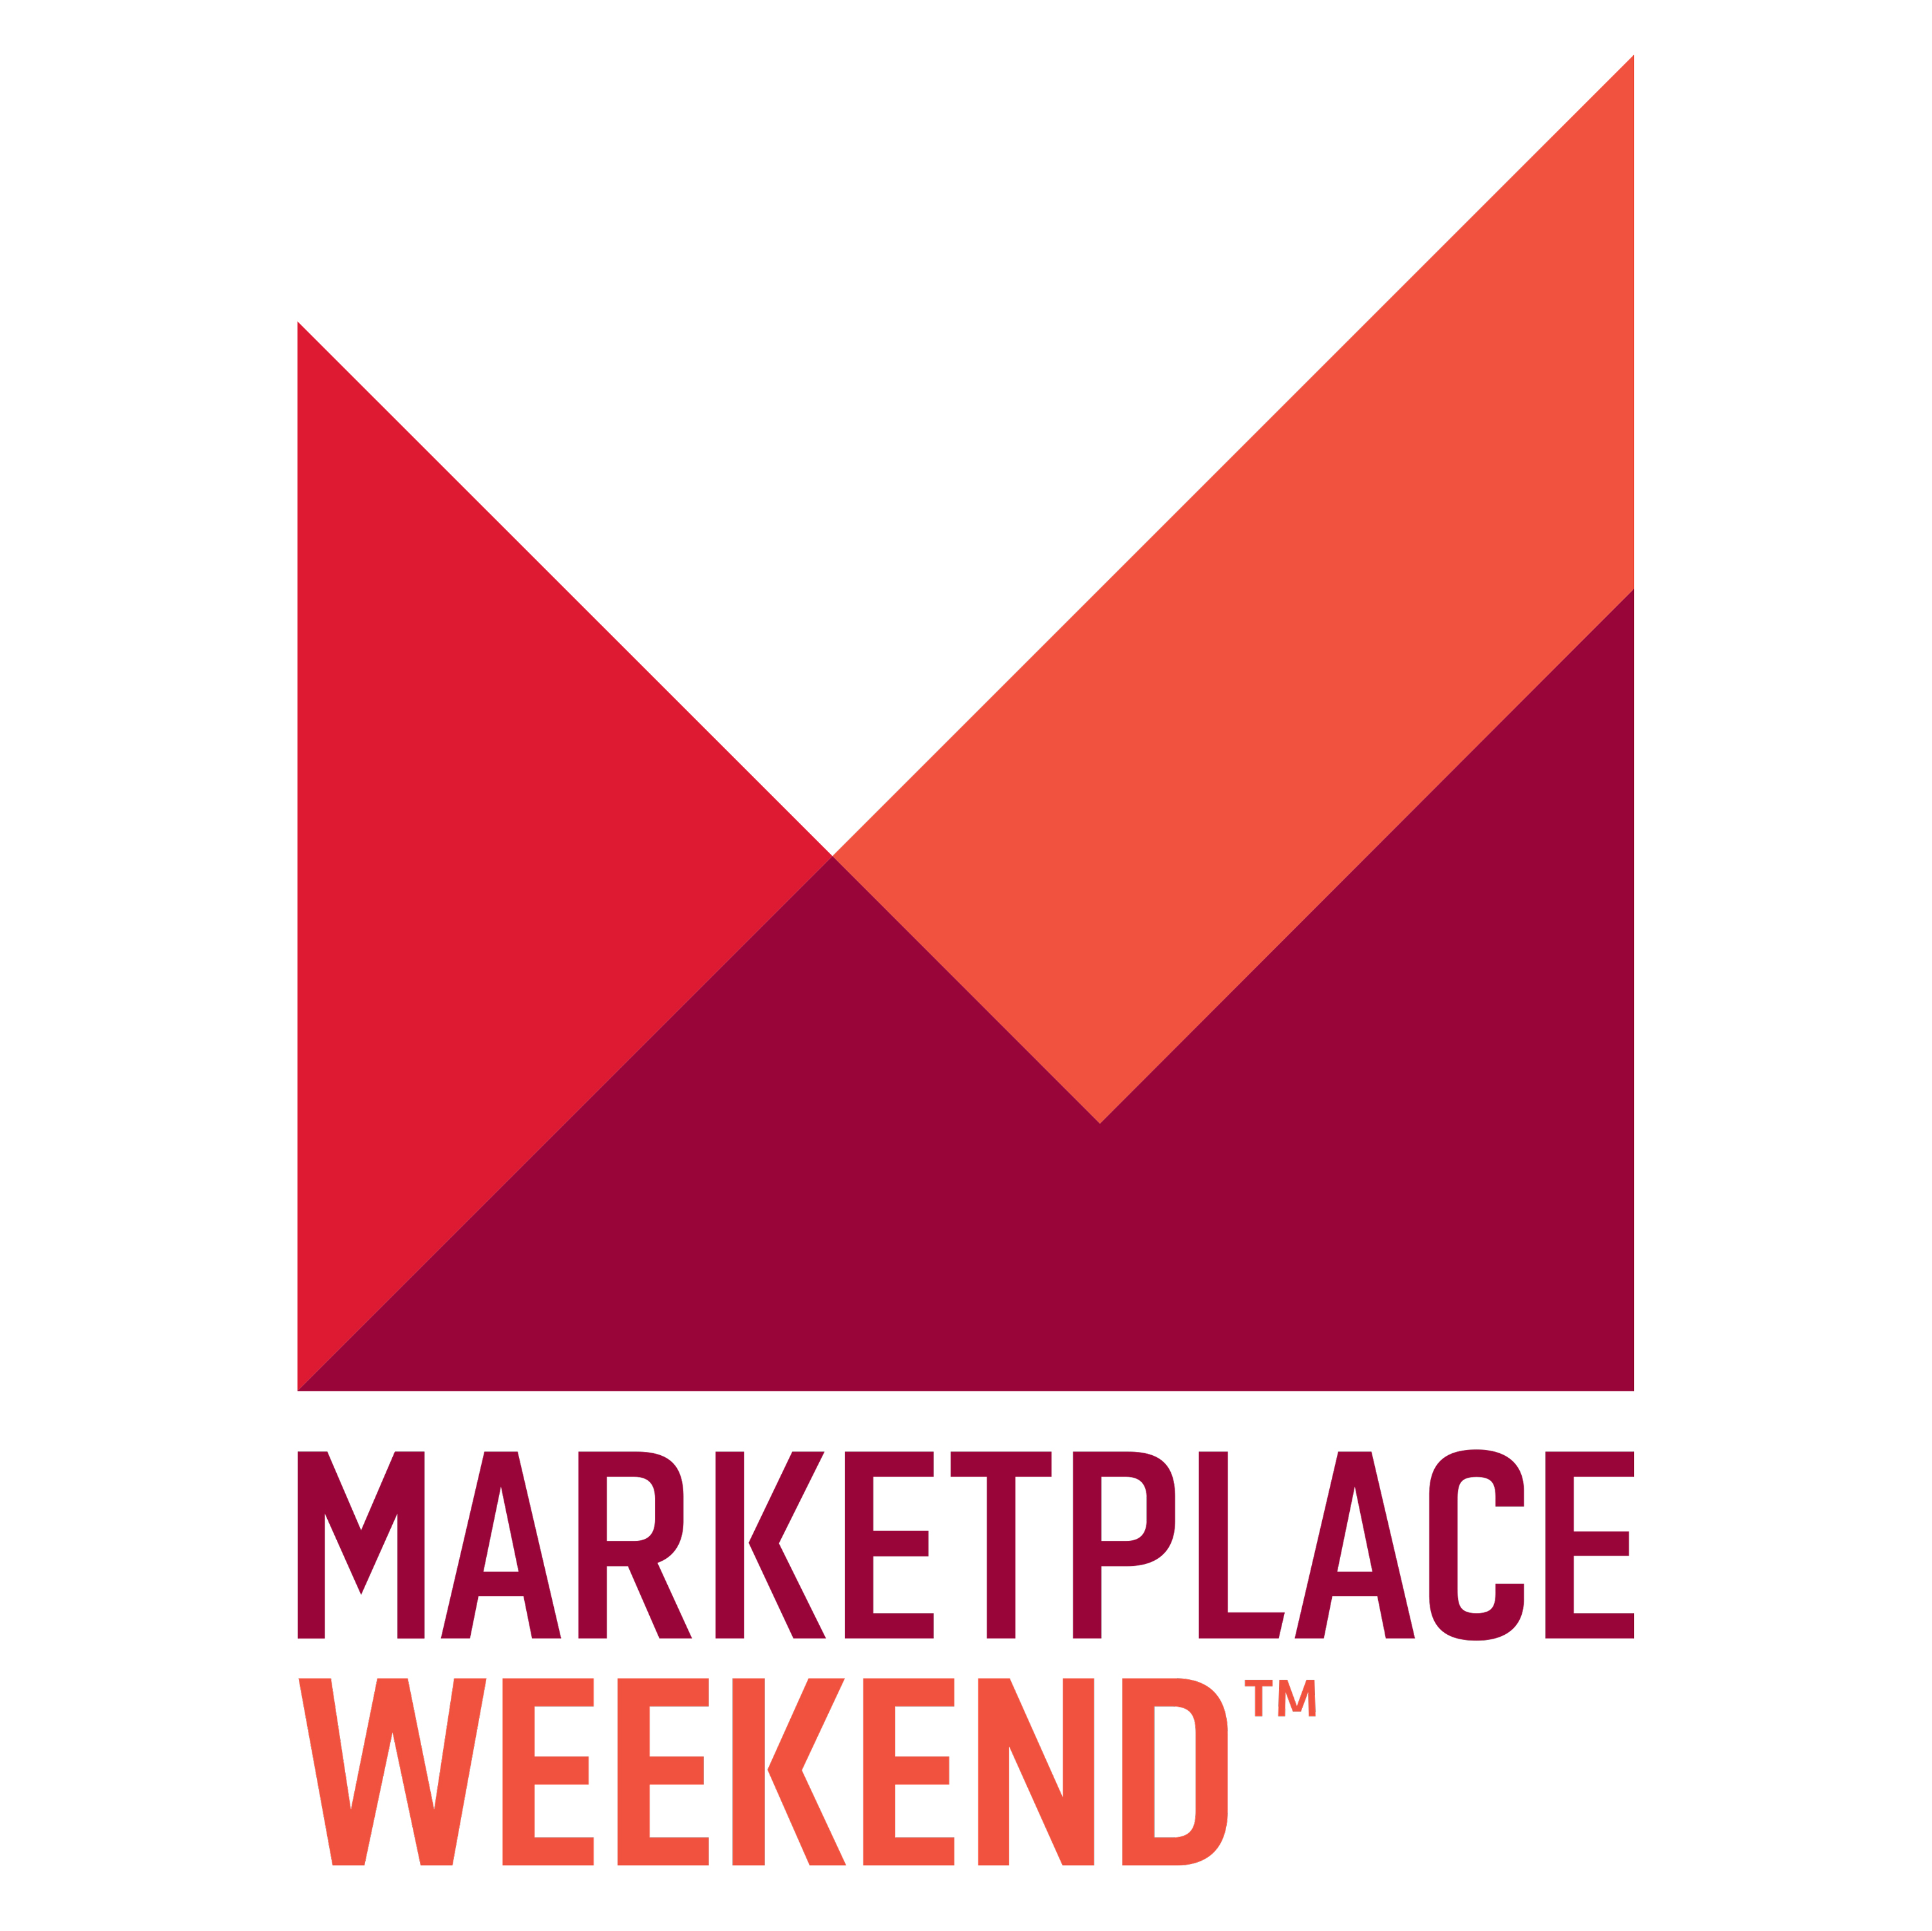 Marketplace Weekend